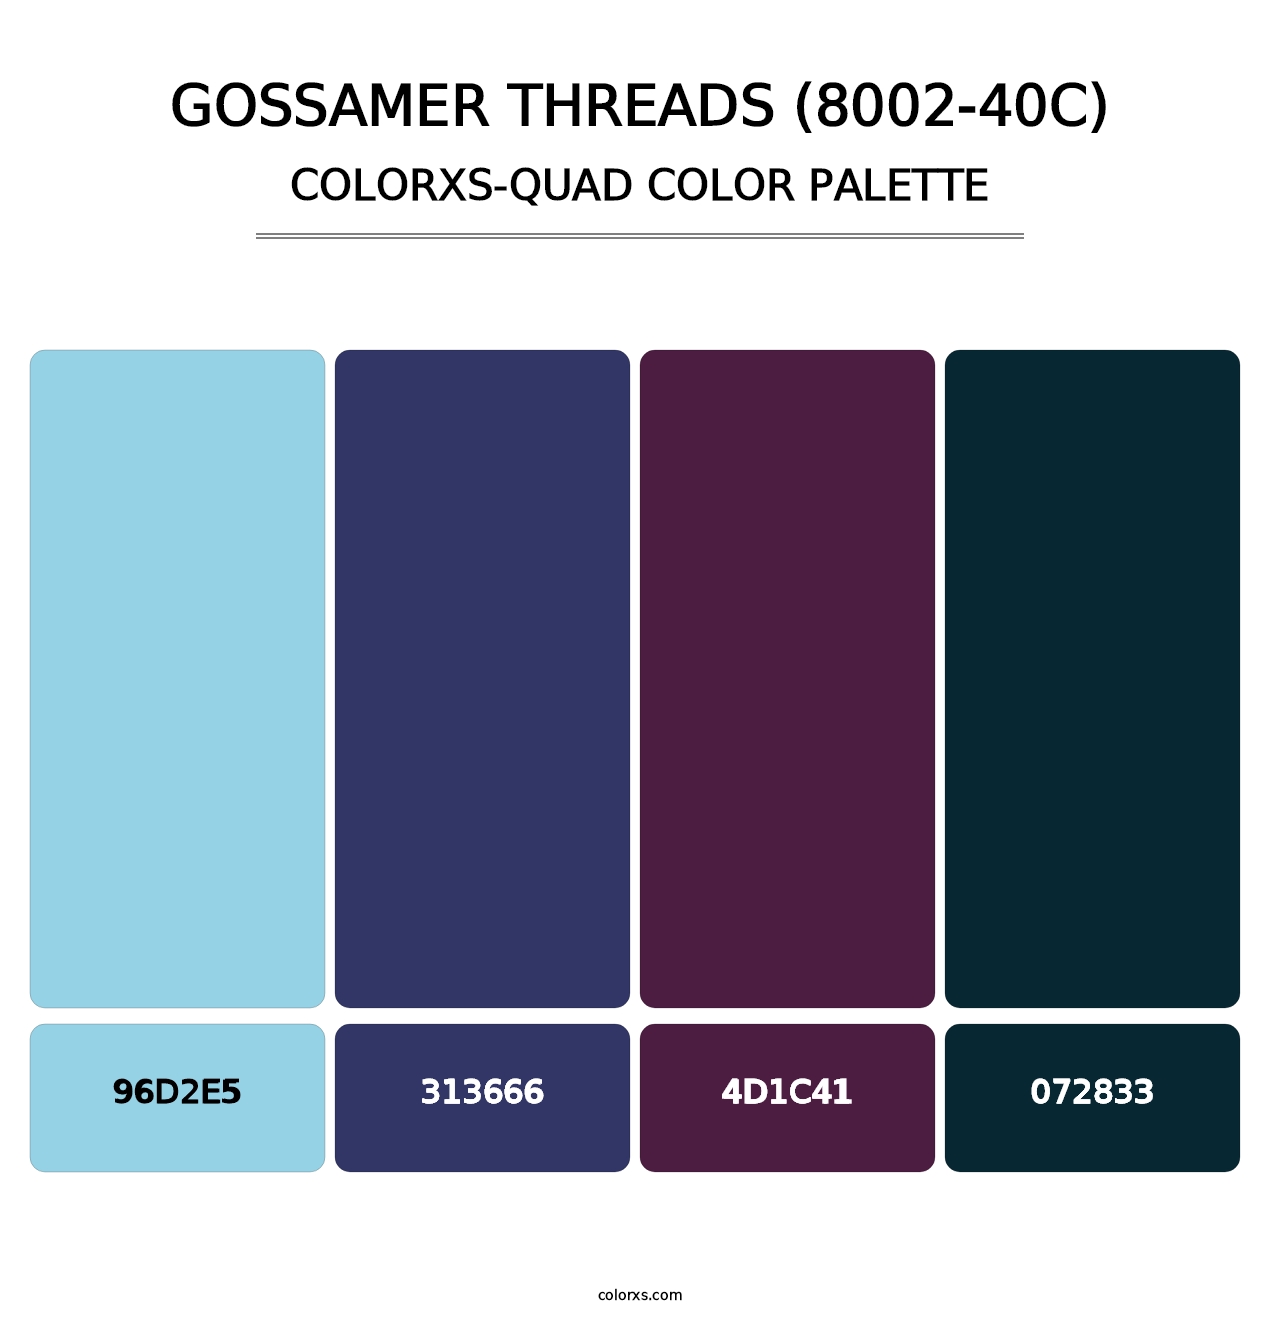 Gossamer Threads (8002-40C) - Colorxs Quad Palette